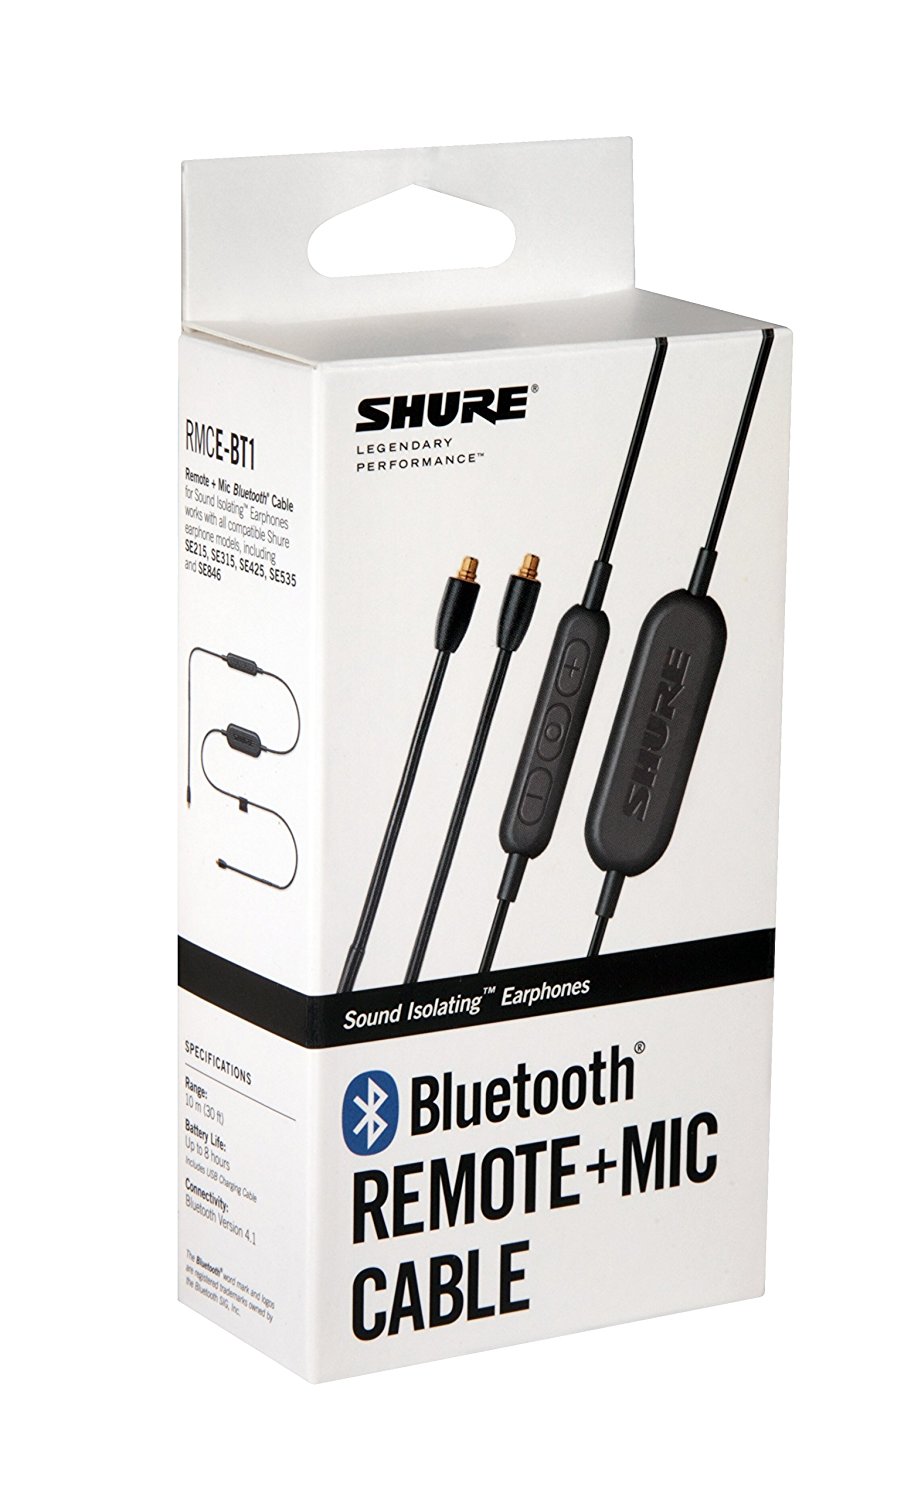 RMCE-BT1 Bluetooth Enabled Accessory Cable with Remote + Mic FOR SHURE SE215 SE315 SE425 SE535 SE846: Default Title